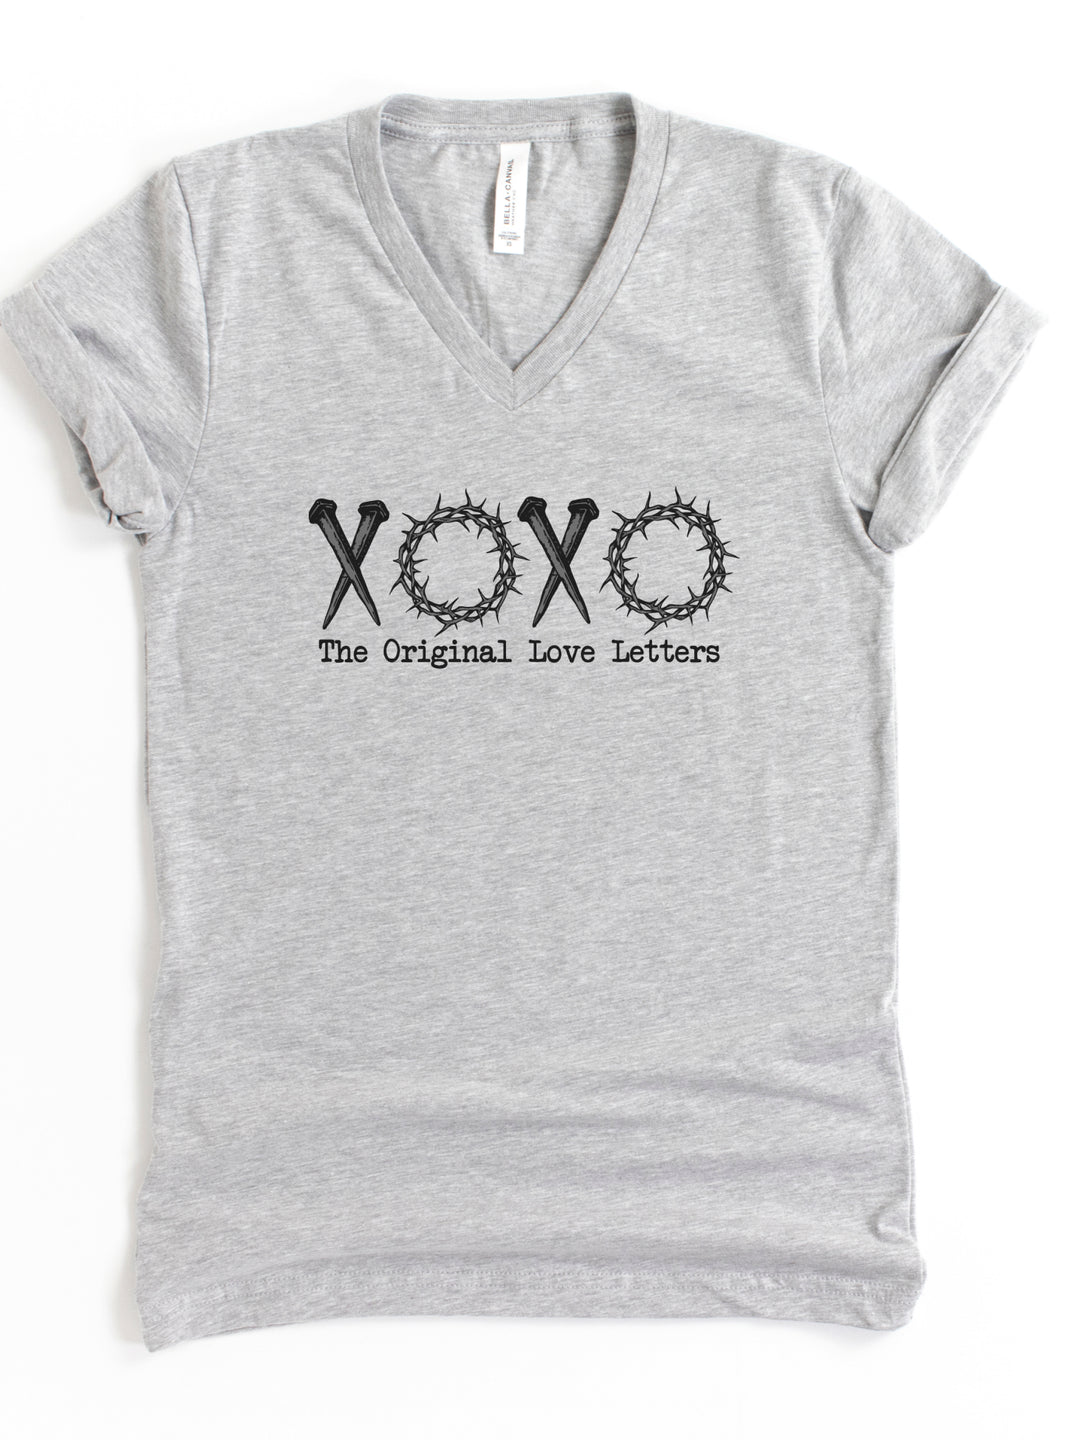 XOXO The Original Love Letters - Unisex V-Neck Tee